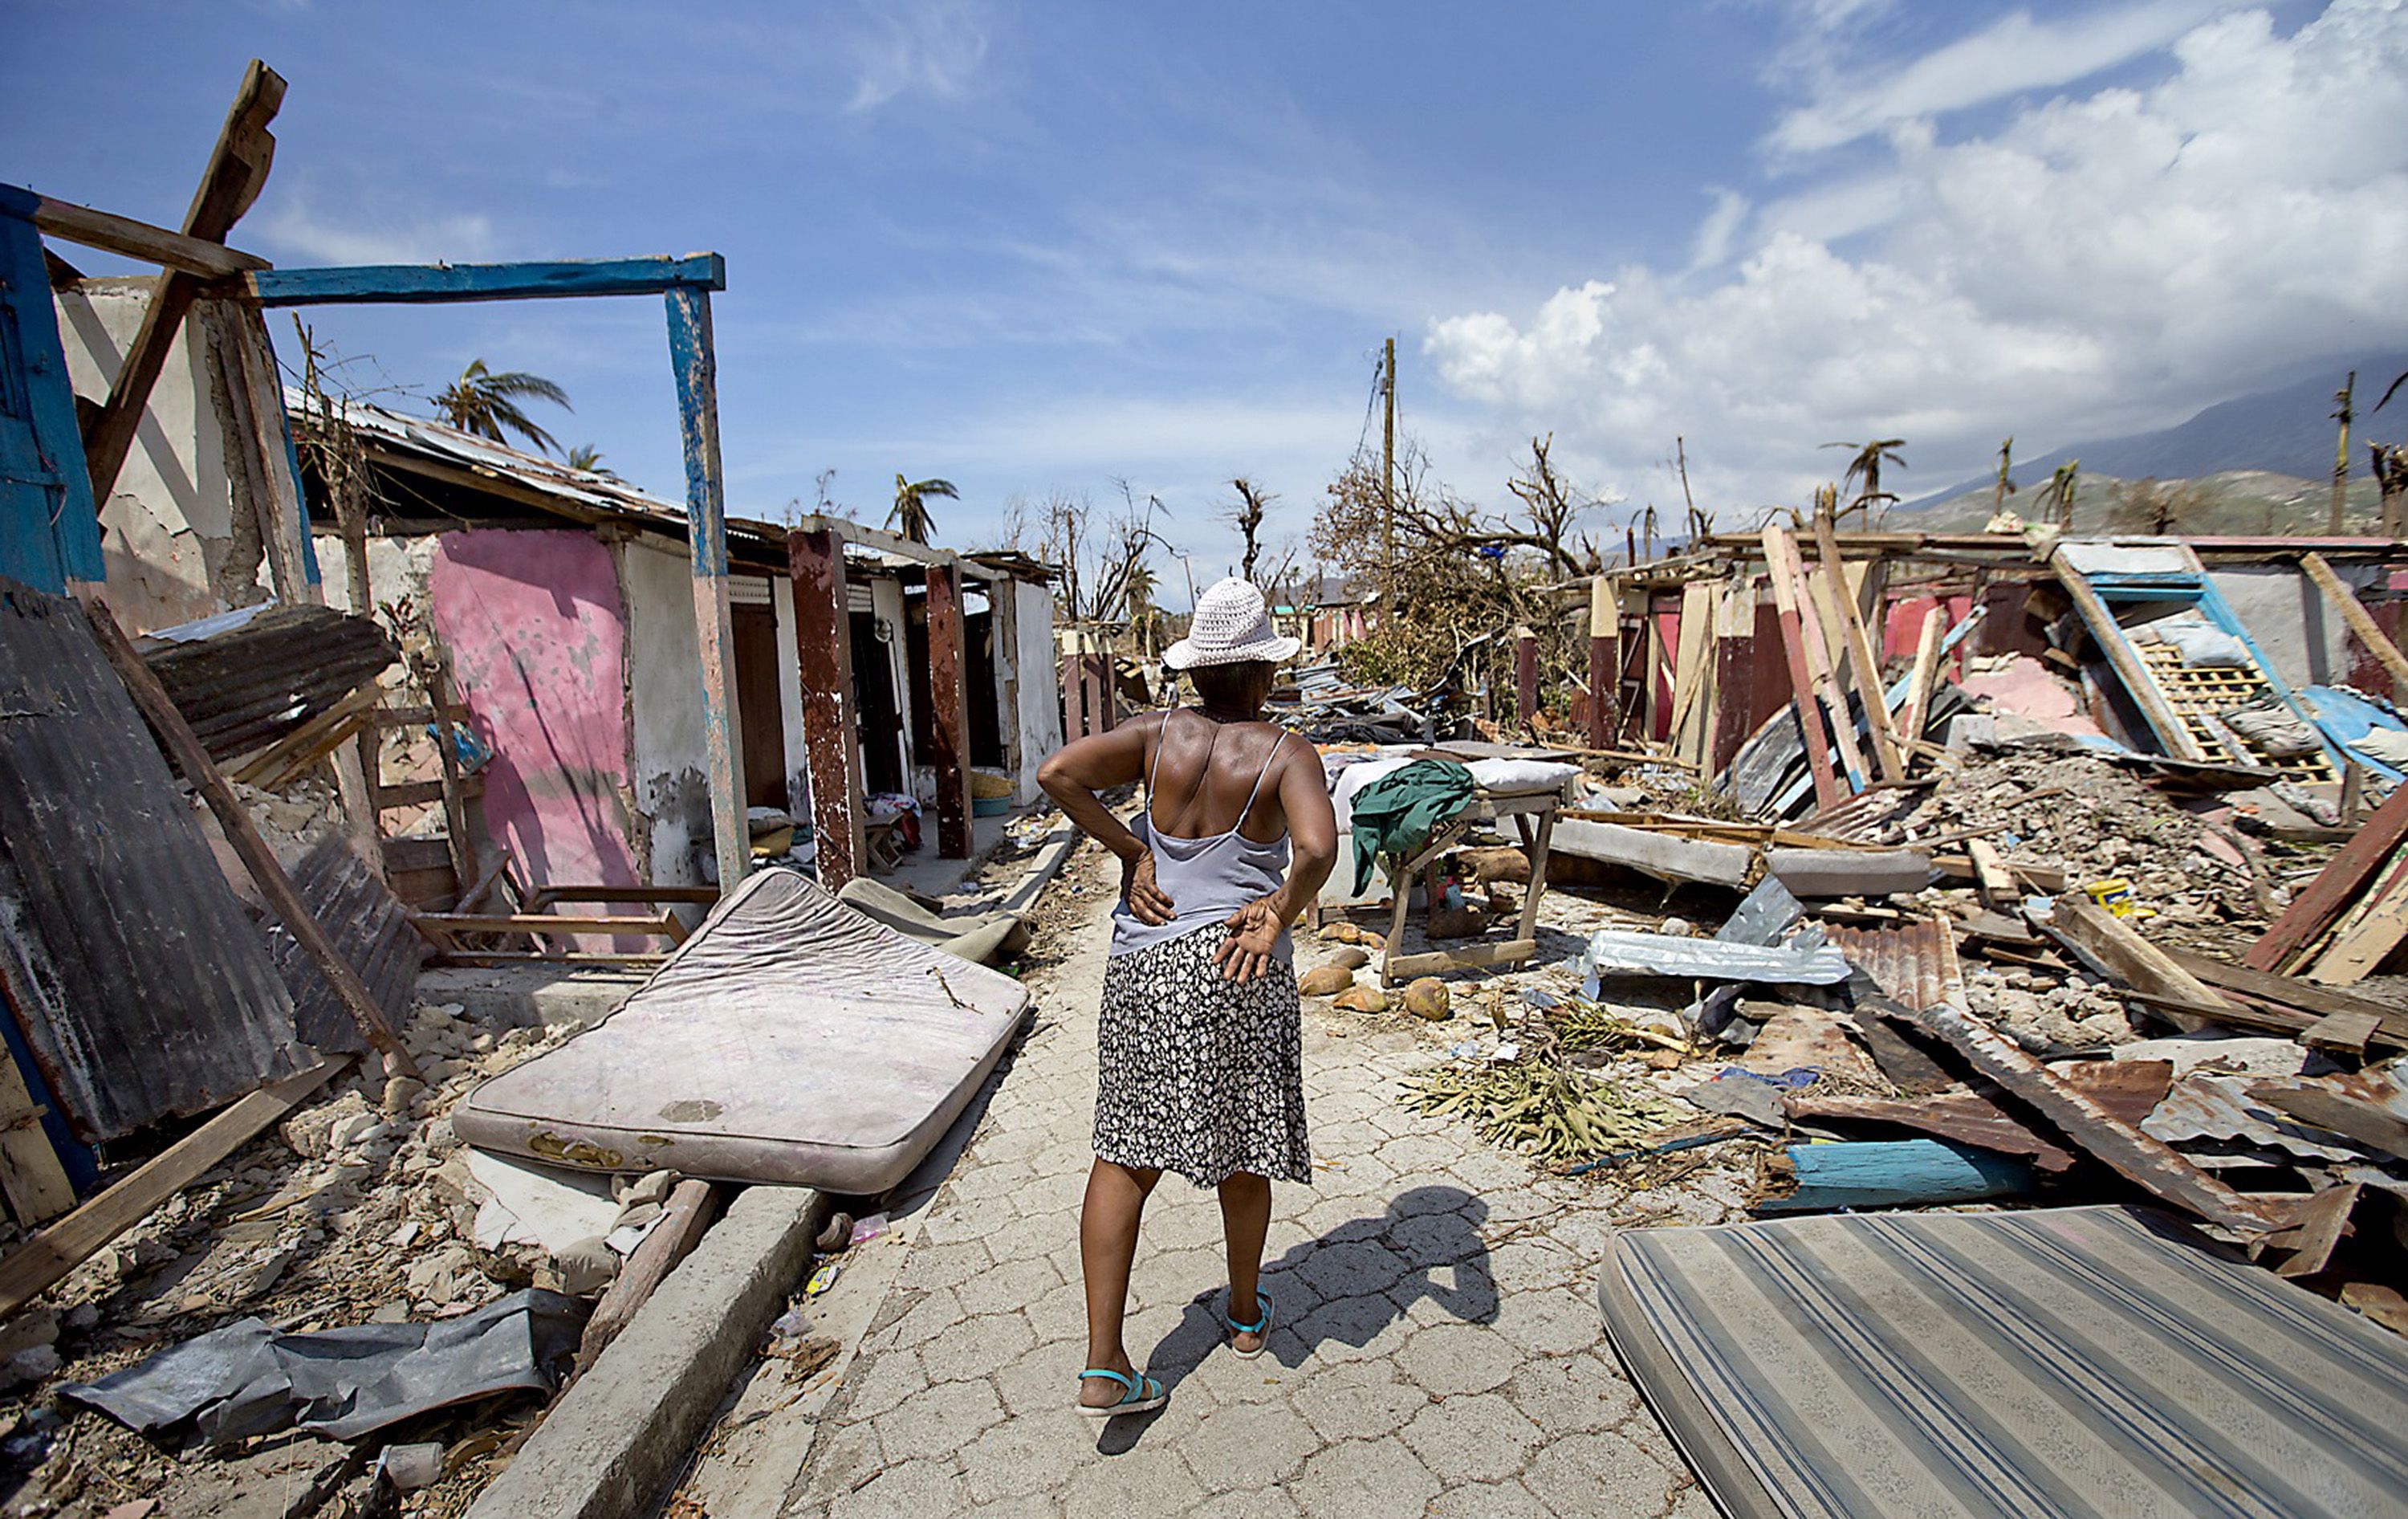 An elderly woman walks along a debris filled street in Roche a Bateau, Haiti on Sunday, Oct. 9, 2016. (Patrick Farrell/Miami Herald/TNS)